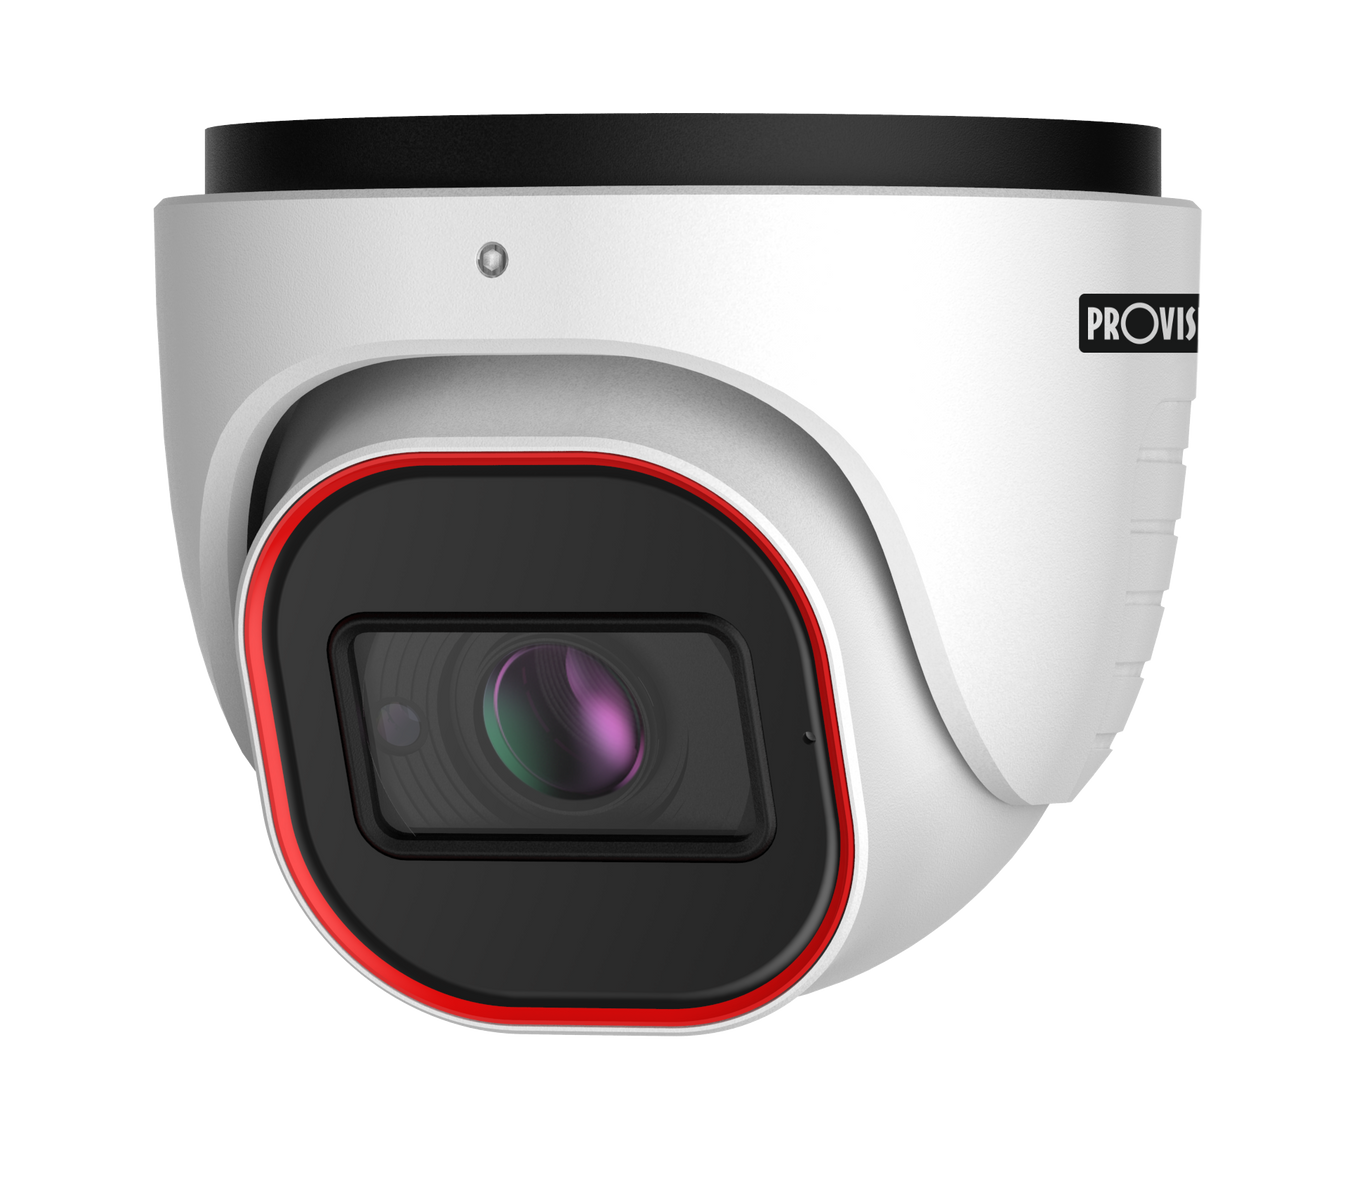 Turret IP camera's